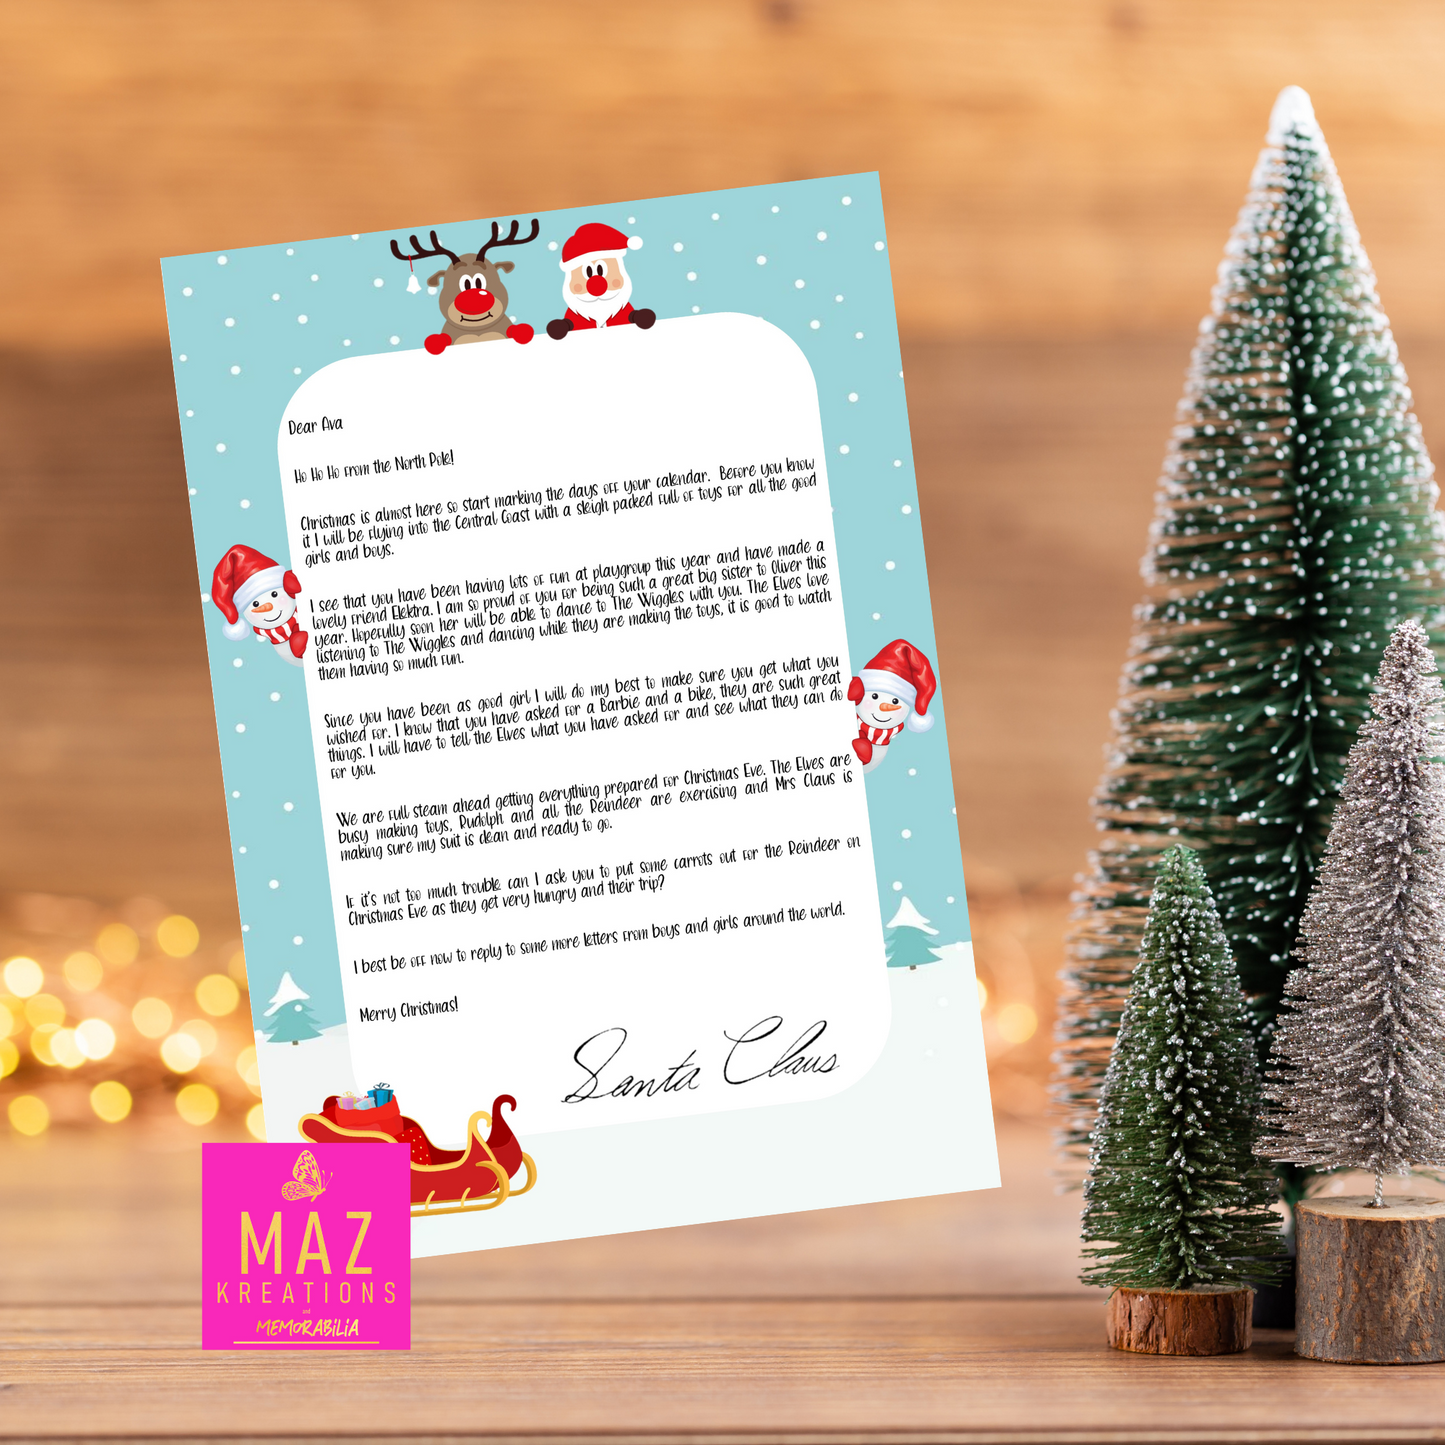 Letter from Santa - Rudolph/Santa/Snowman